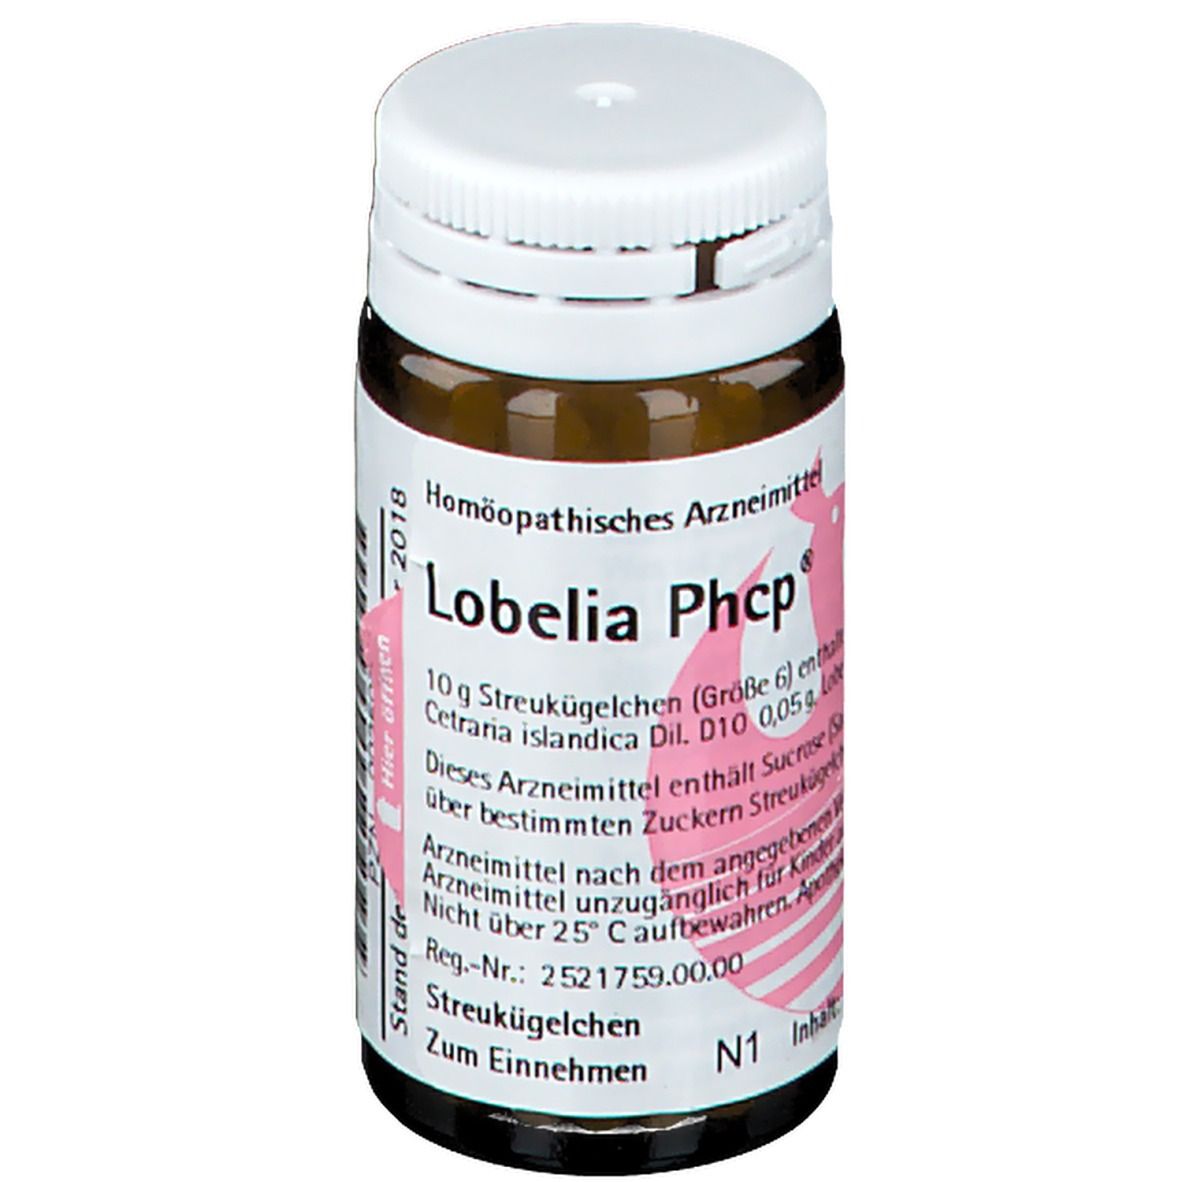 Lobelia Phcp®